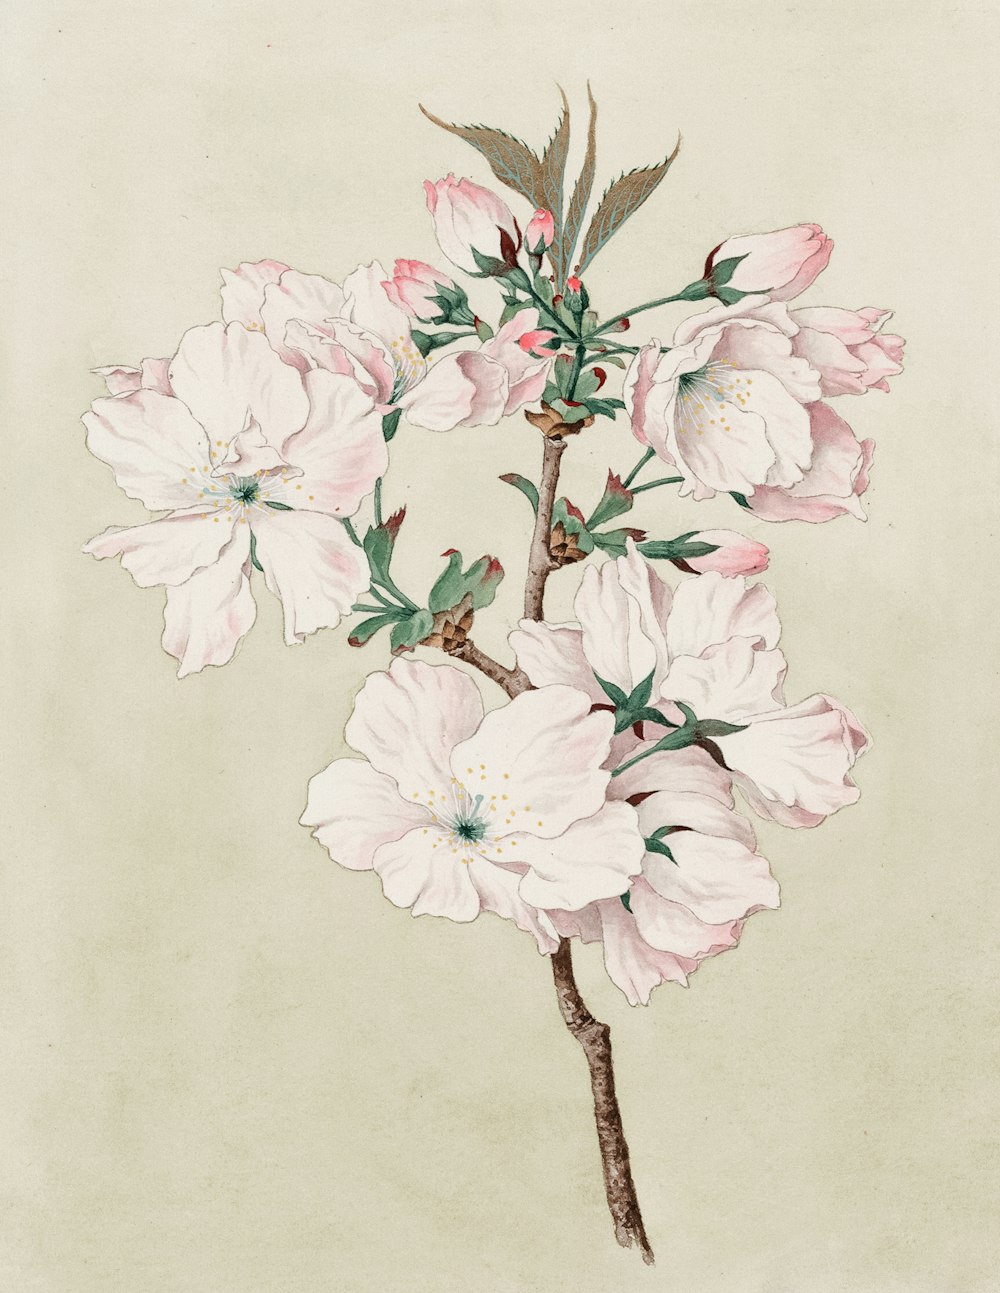 Watercolor of ariaki (daybreak) cherry blossoms.